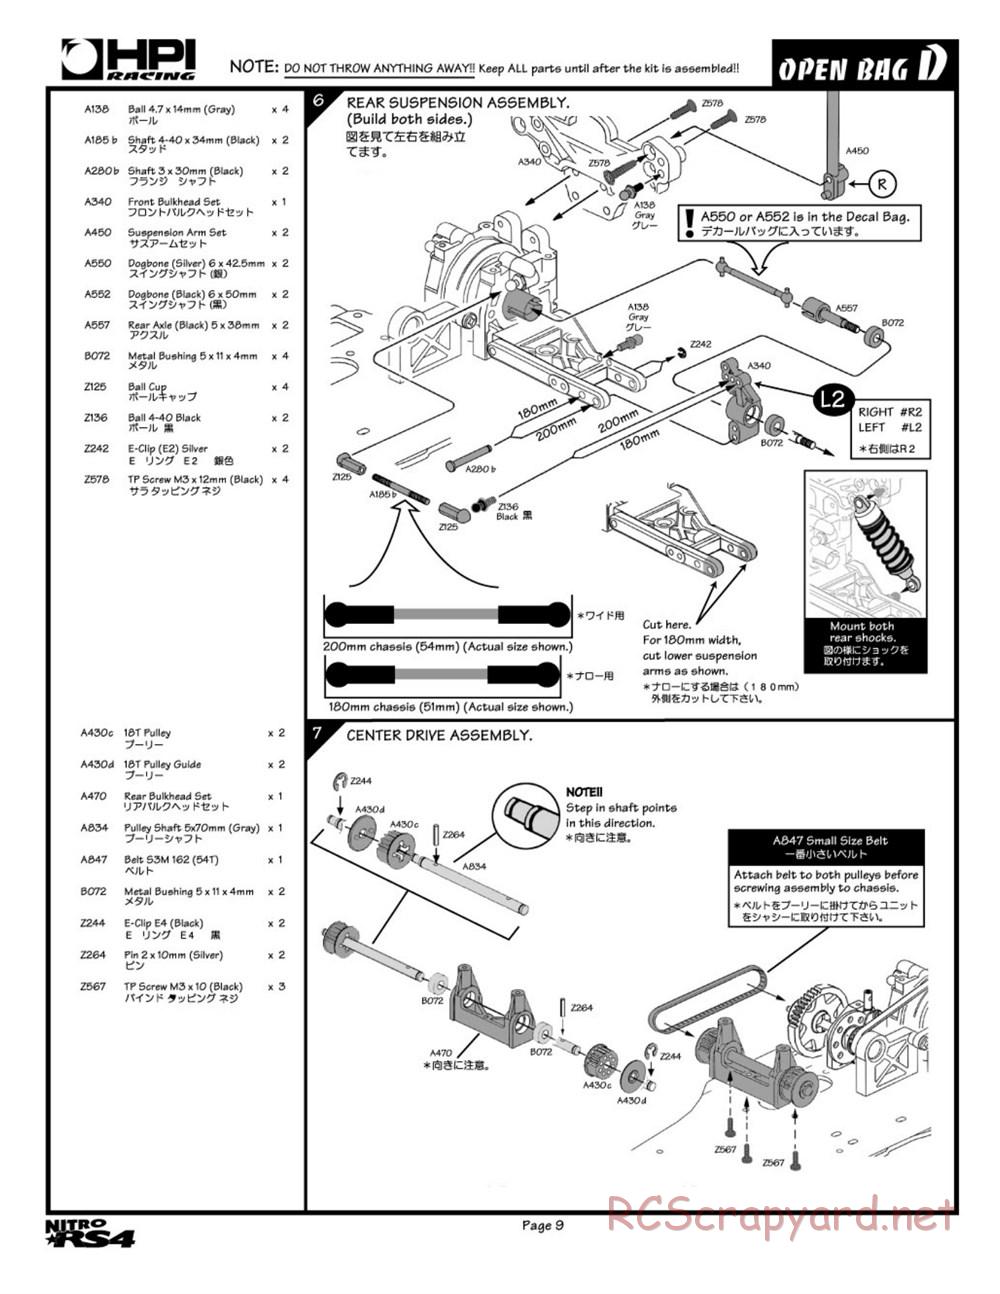 HPI - Nitro RS4 - Manual - Page 9